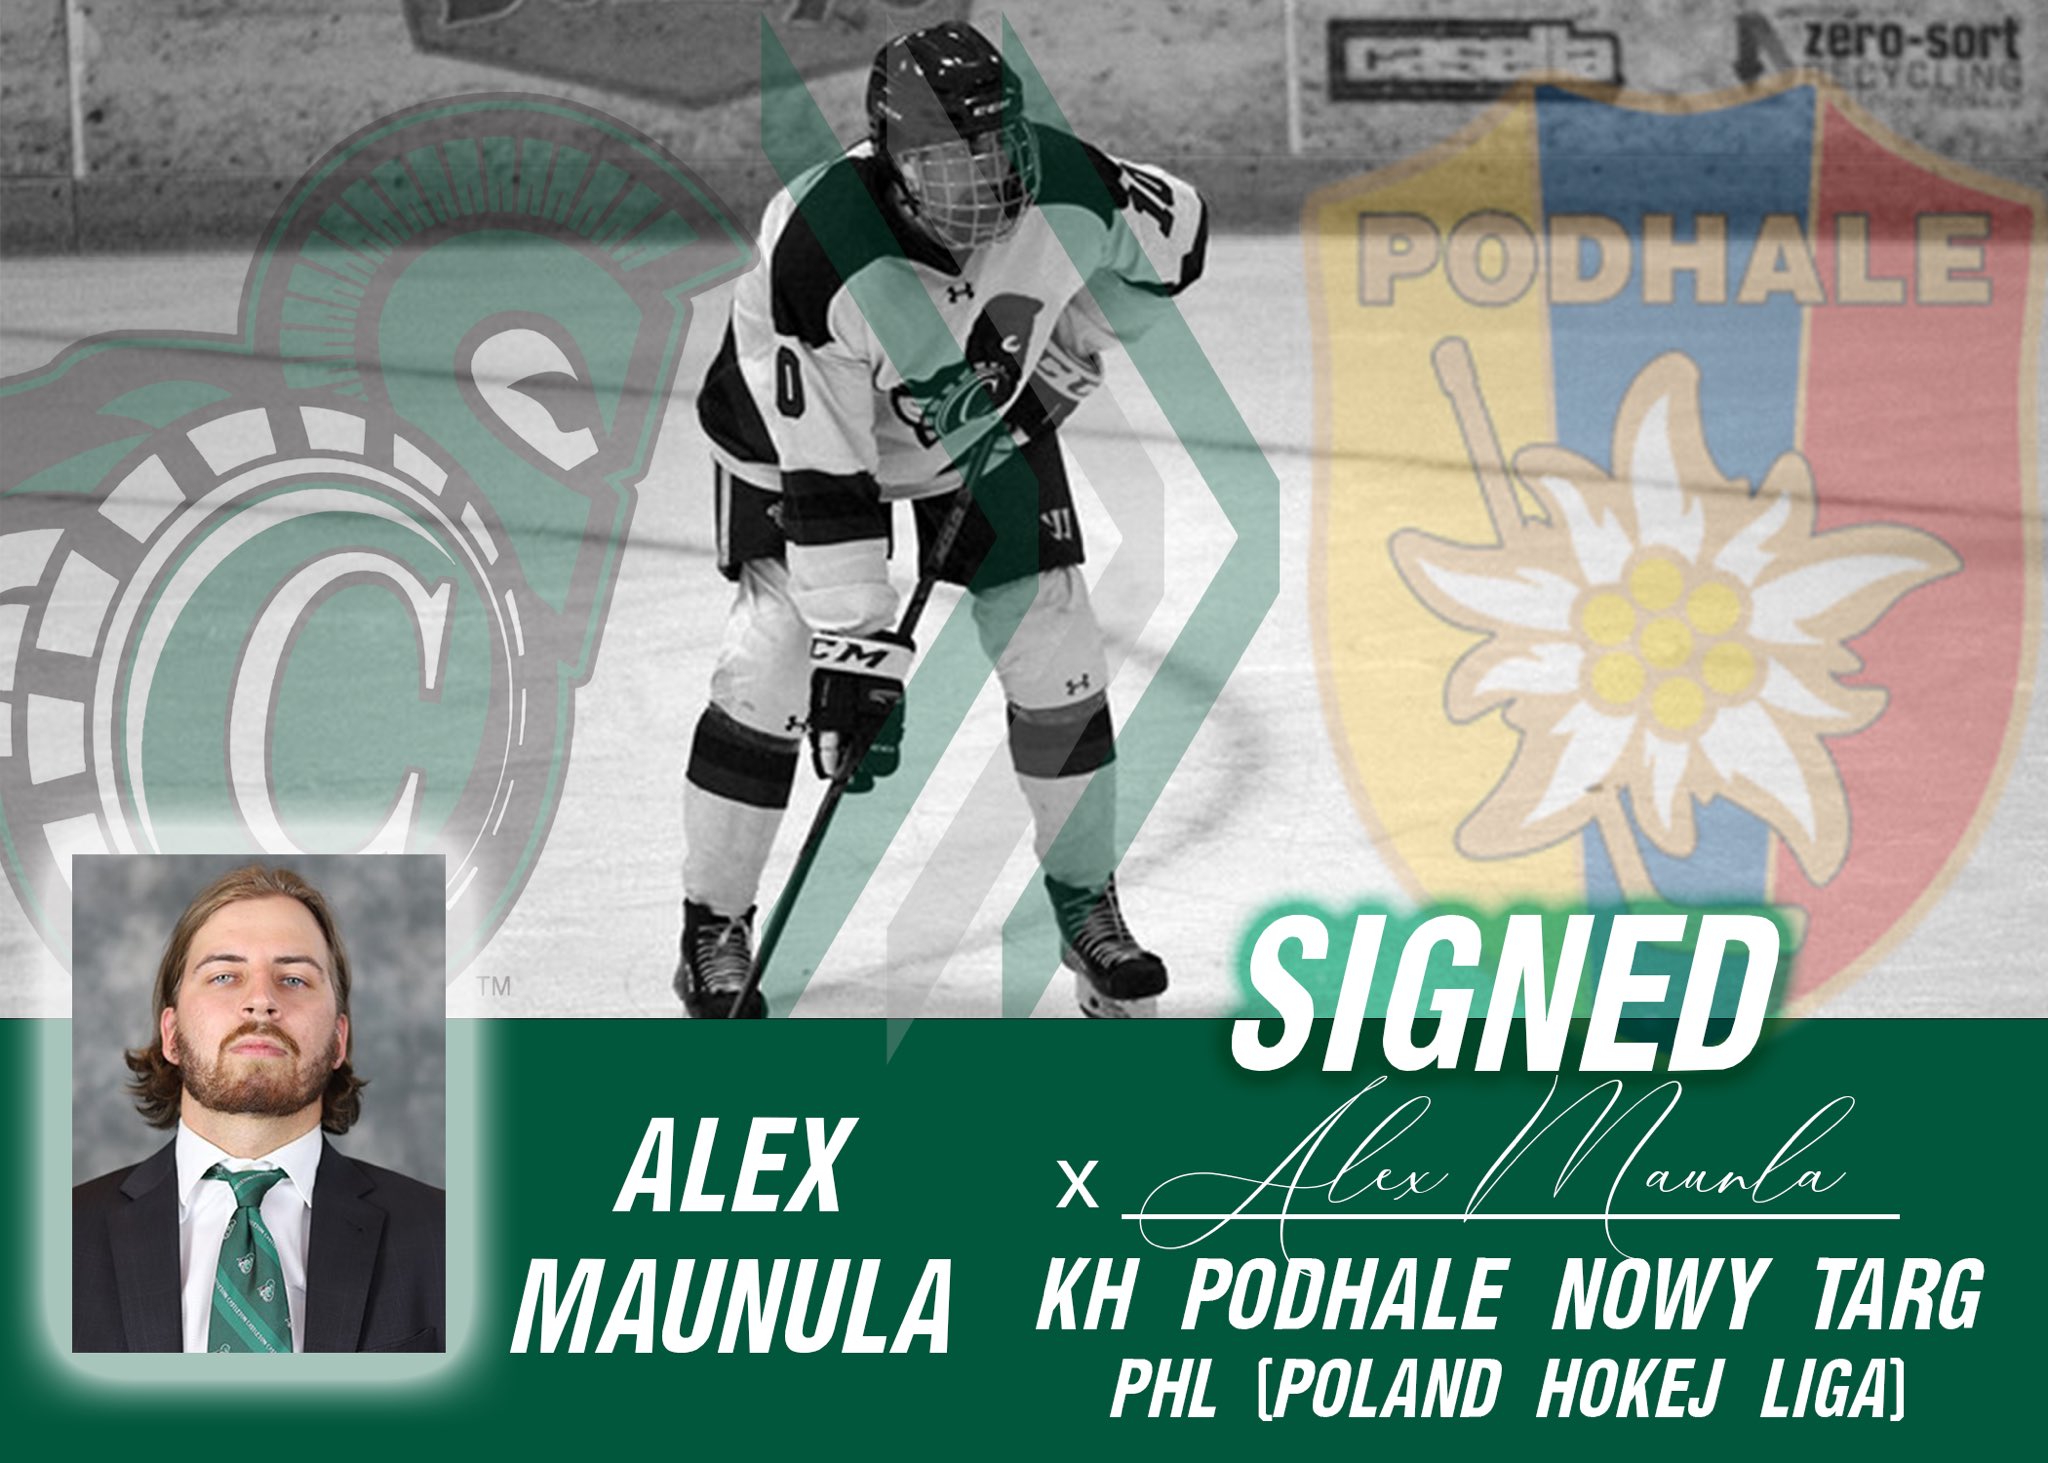 CU Spartans Men's Hockey on X: 🚨 Professional Signing Alert🚨 Spartan  alumni forward Alex Maunula has sign a professional contract with KH  Podhale Nowy Targ of the PHL (Poland Hokej Liga). Maunula